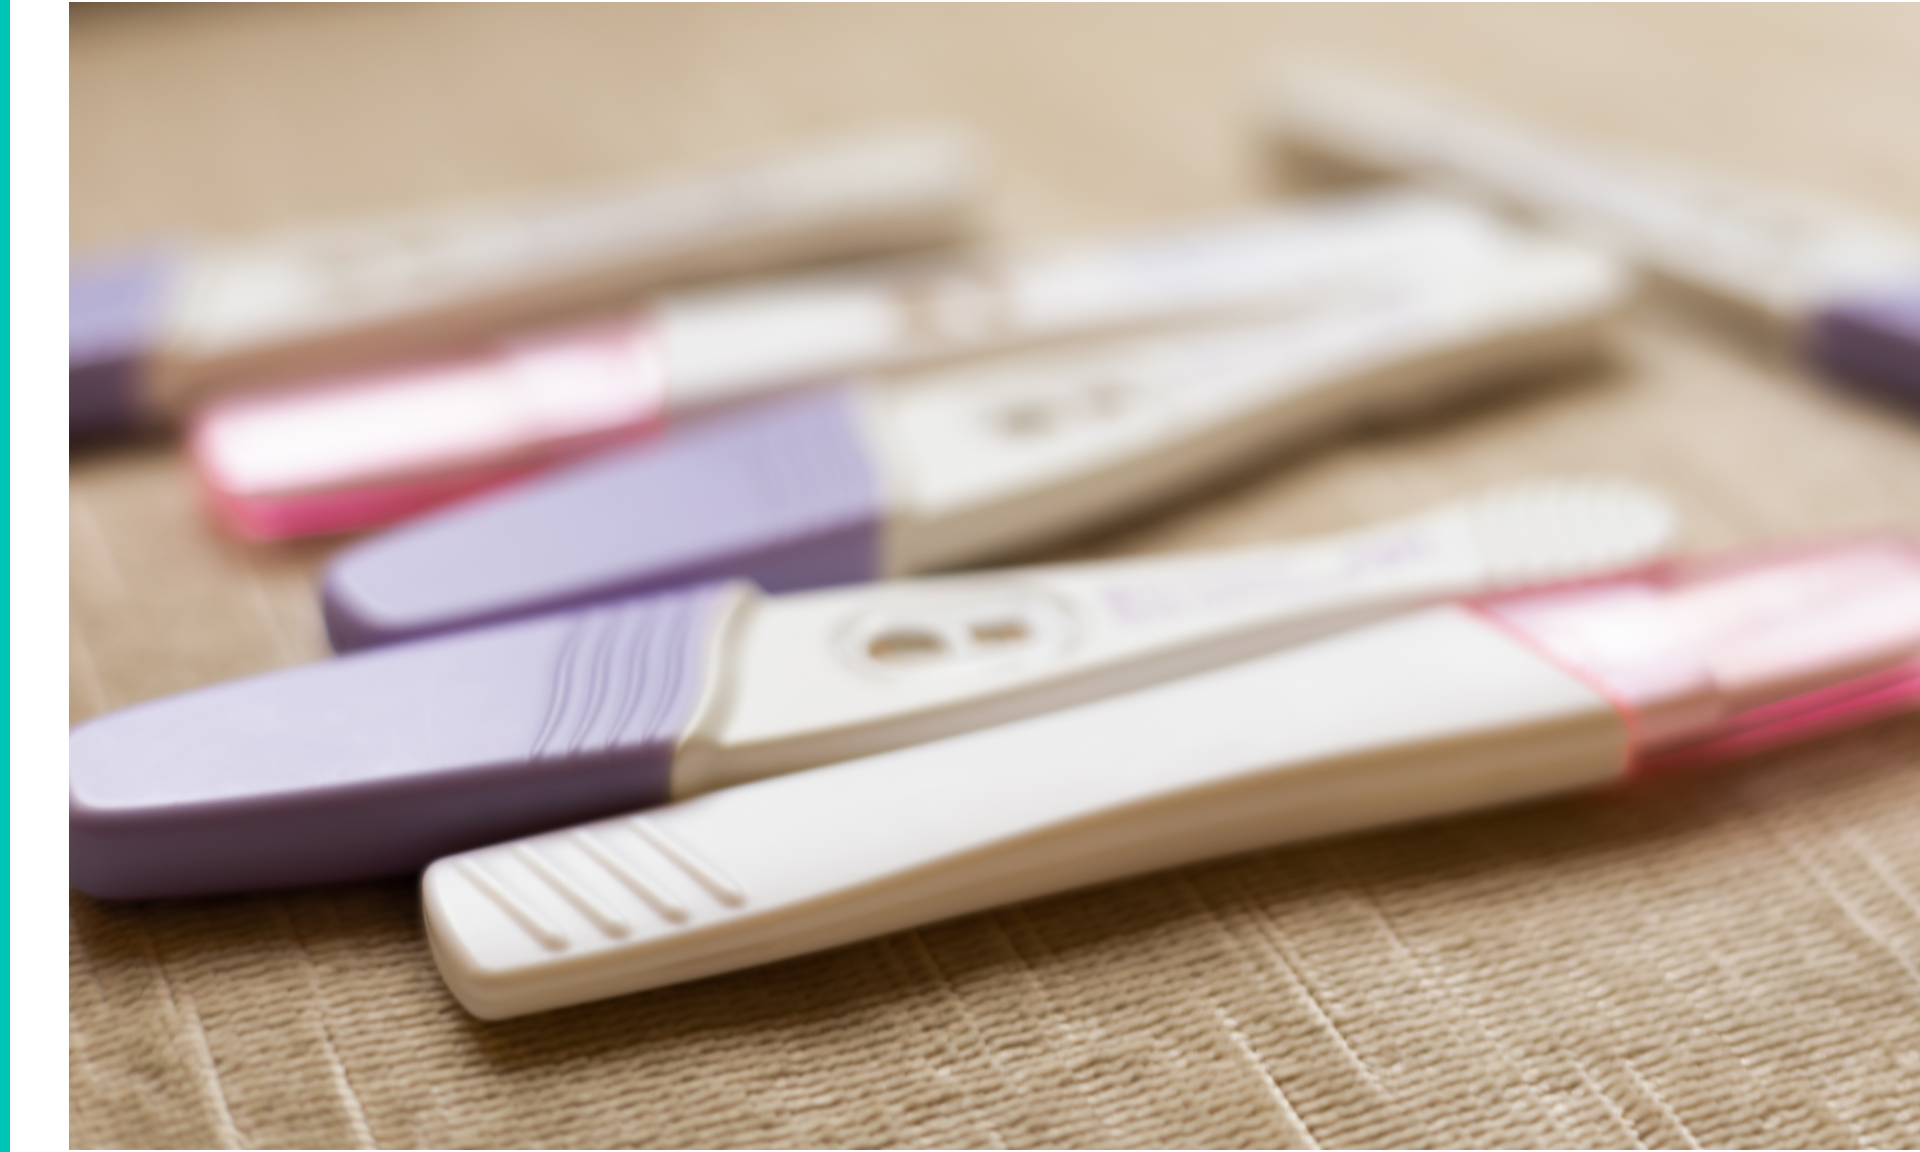 used pregnancy tests